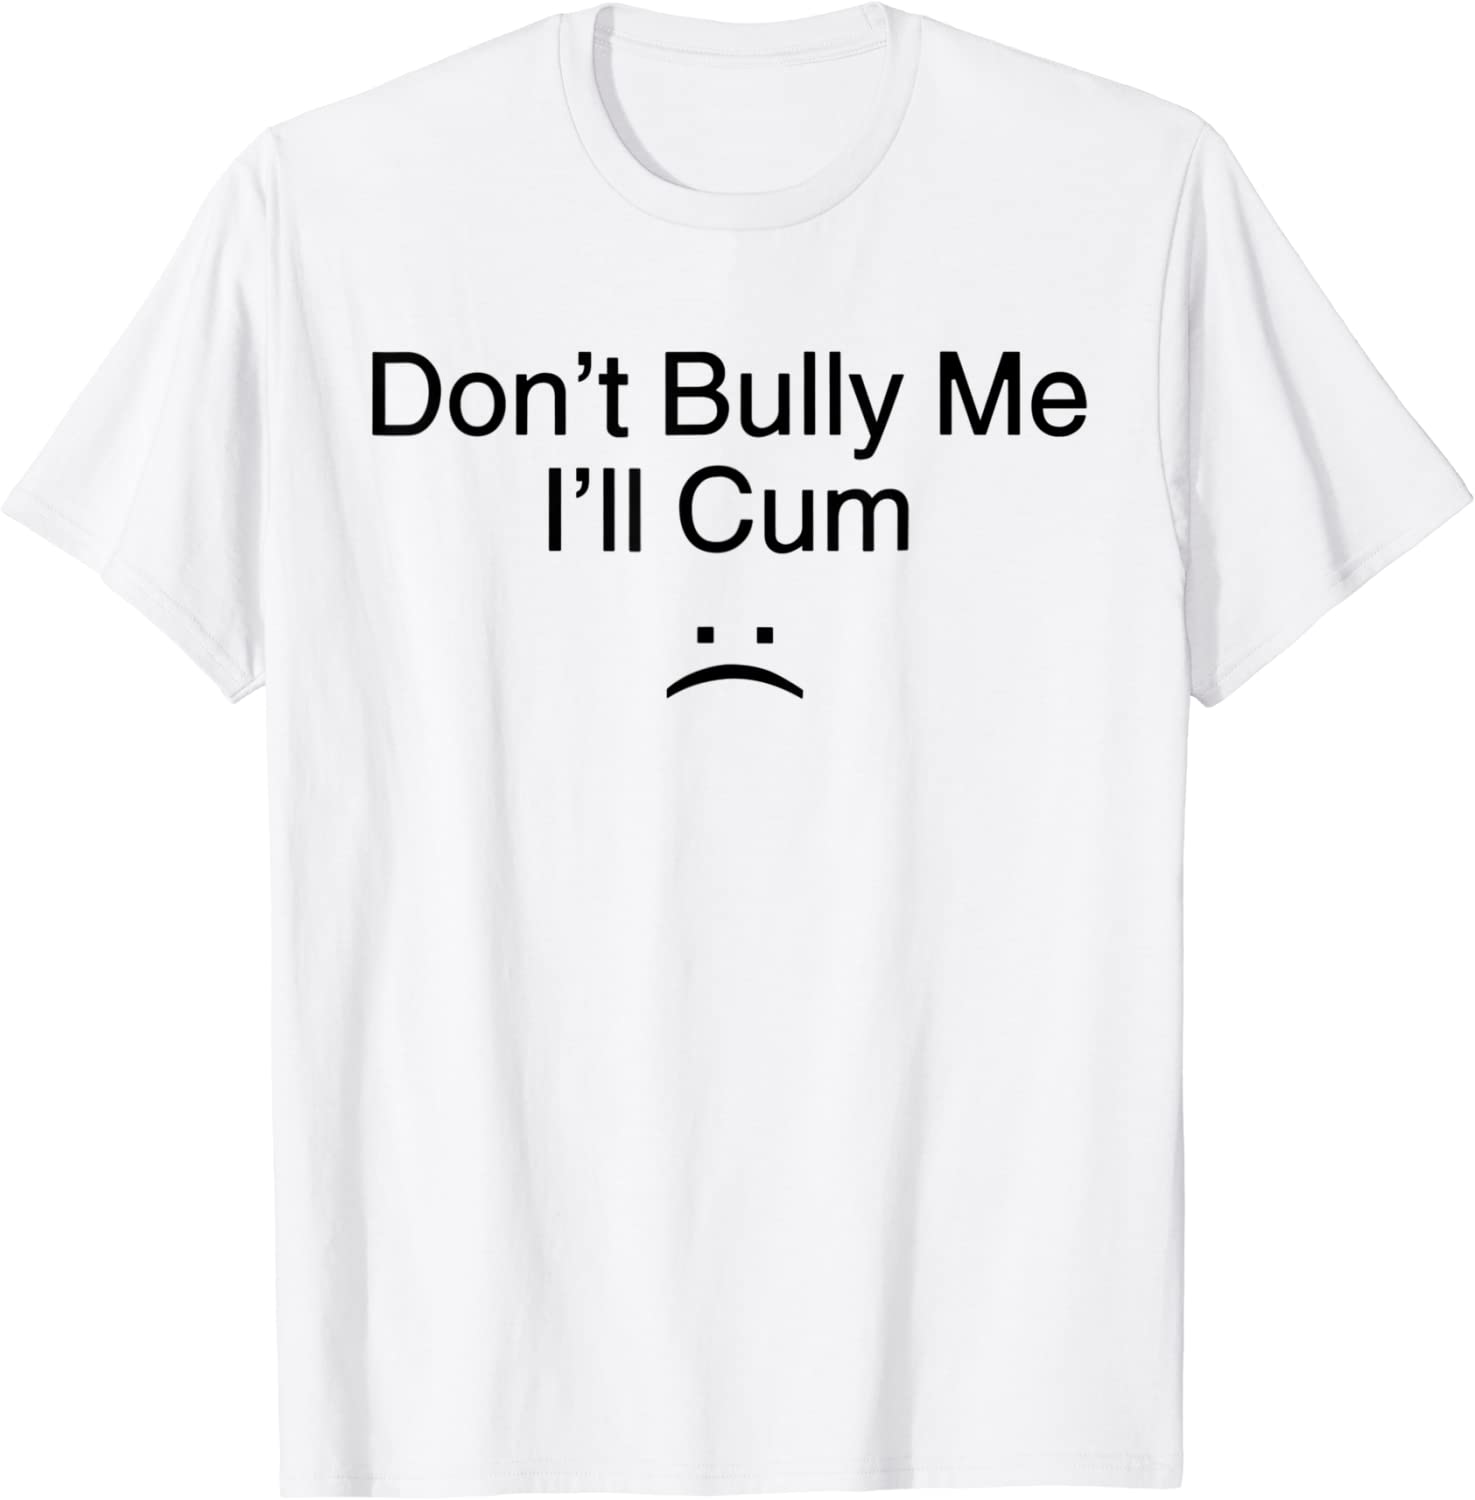 Don't Bully Me I'll Cum (1)